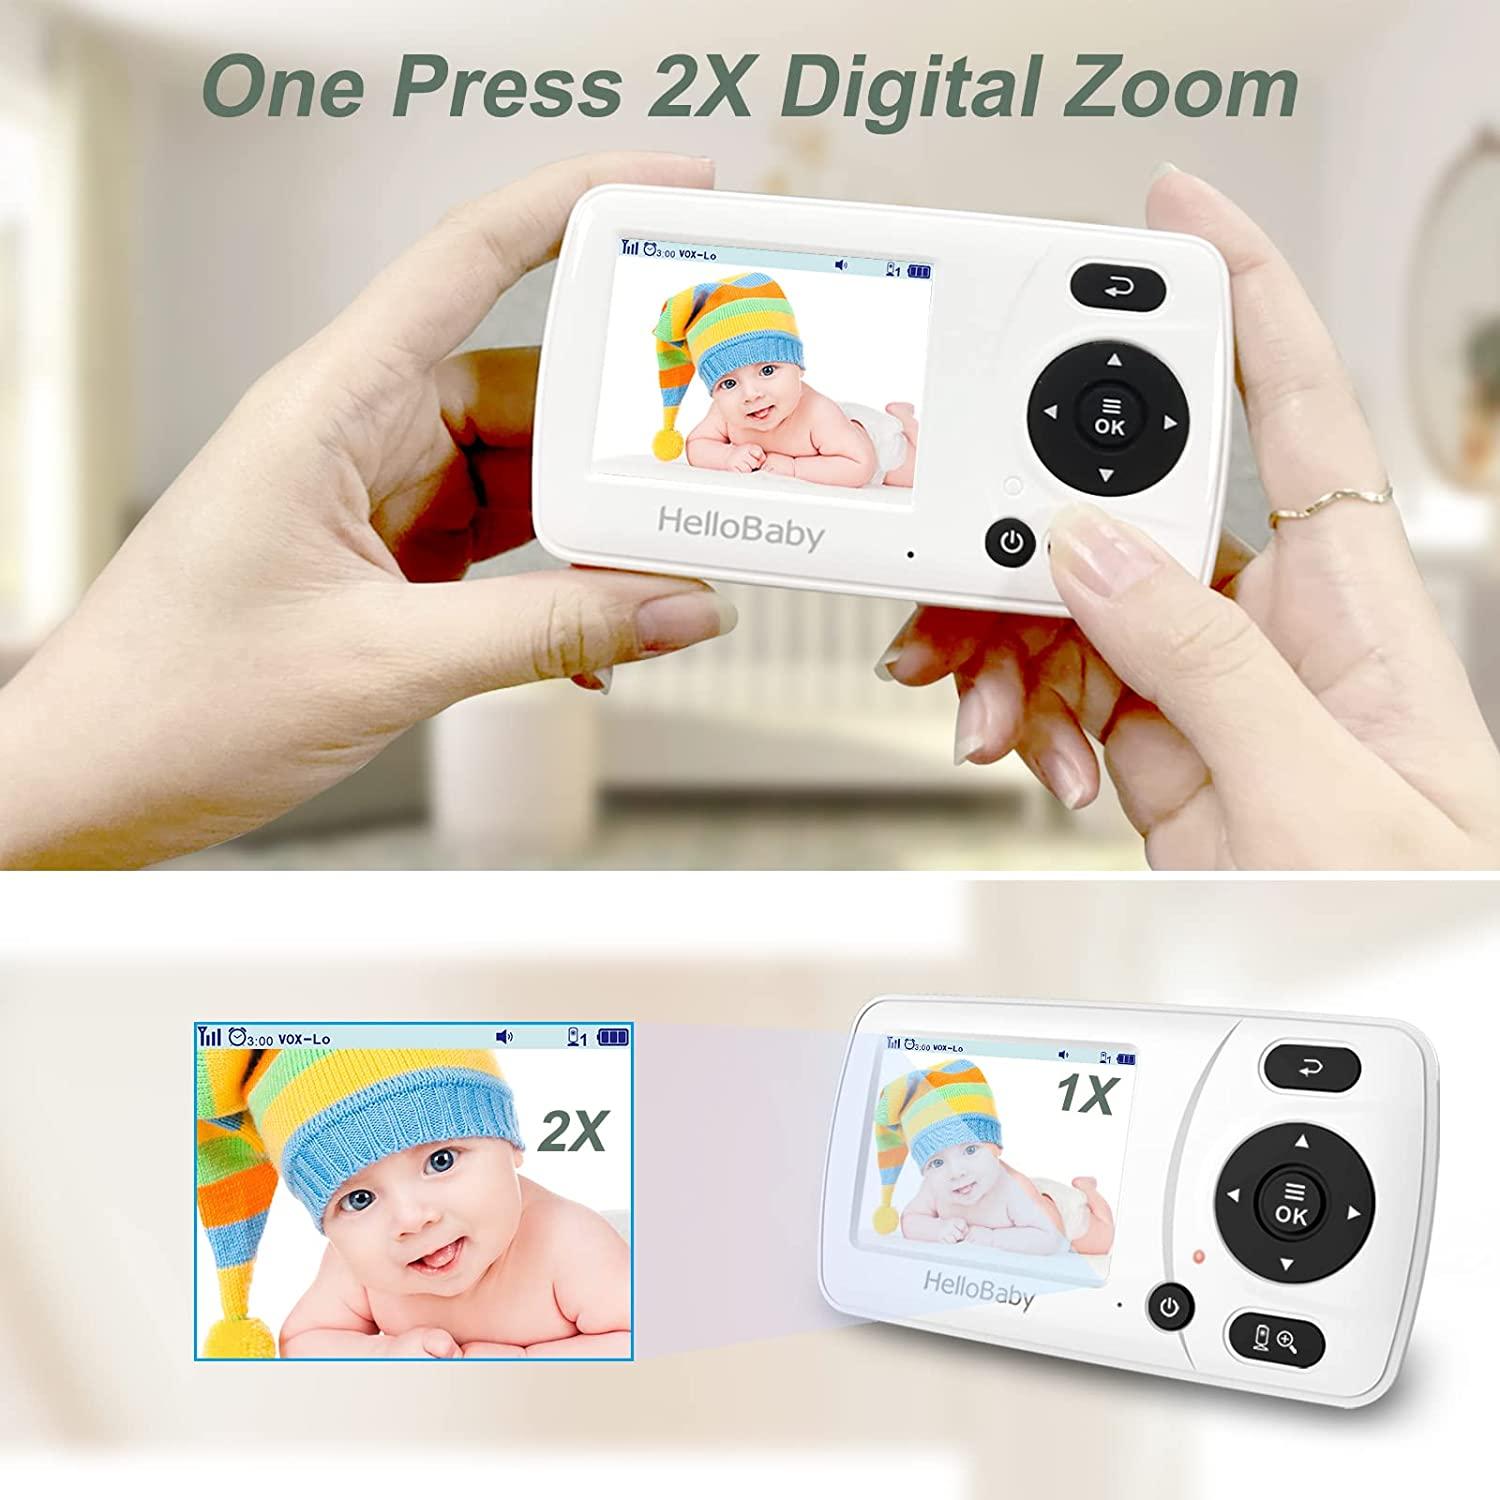 Babyphone Caméra HelloBaby (Vendeur Tiers) –